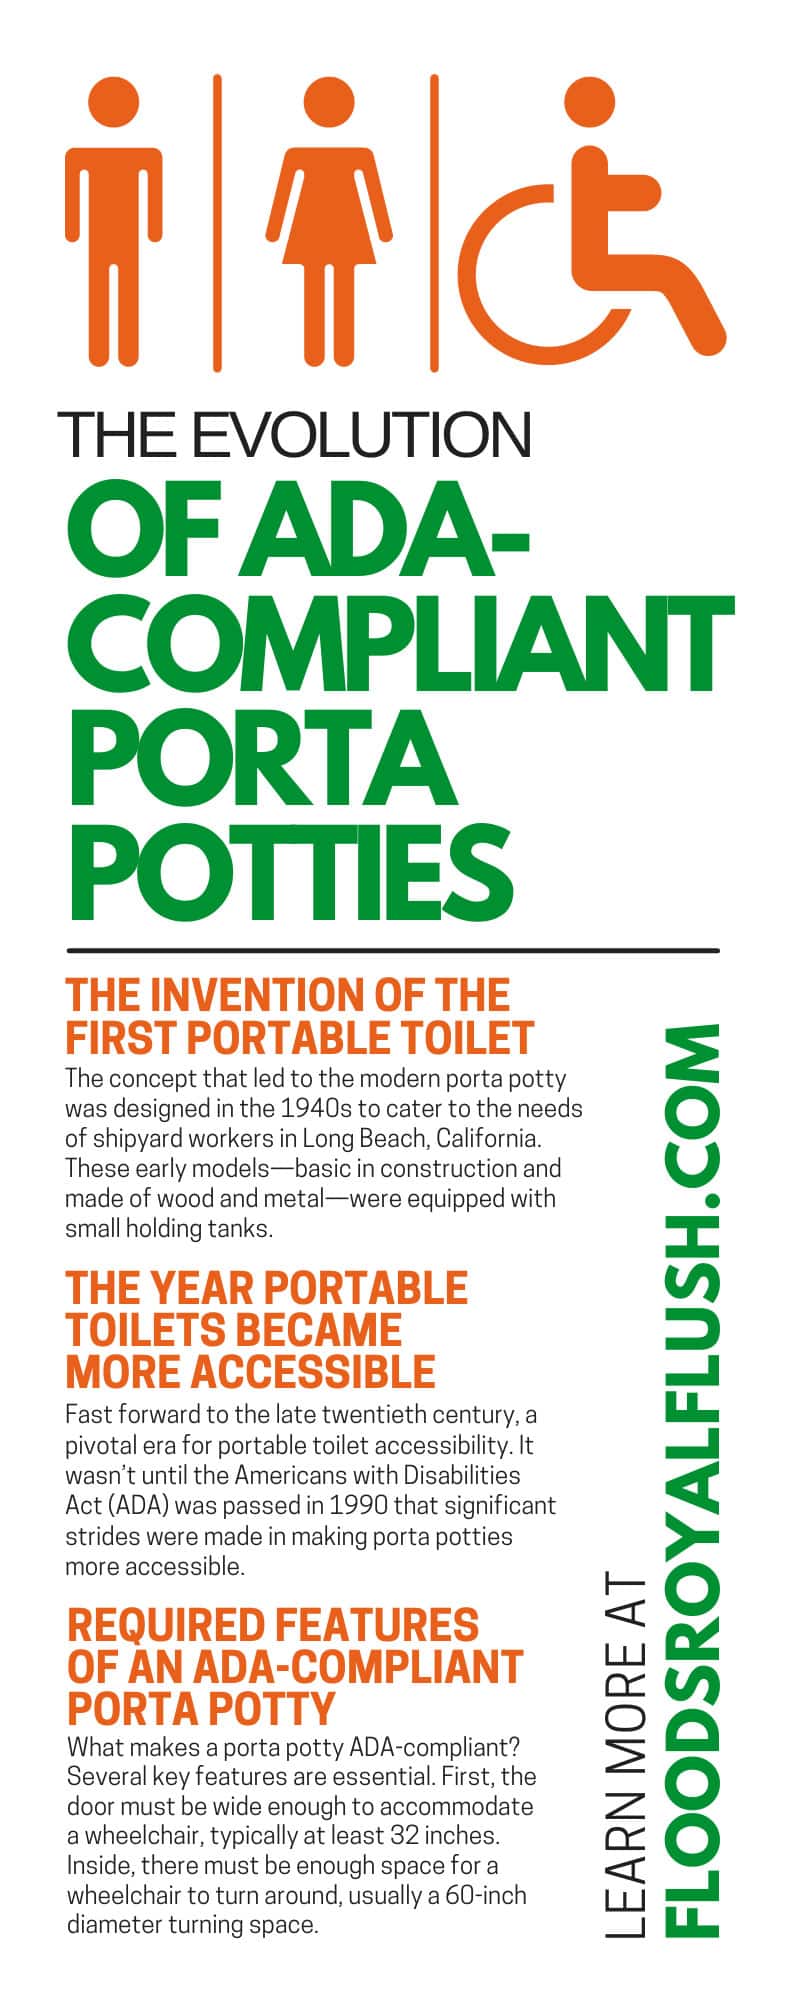 The Evolution of ADA-Compliant Porta Potties
